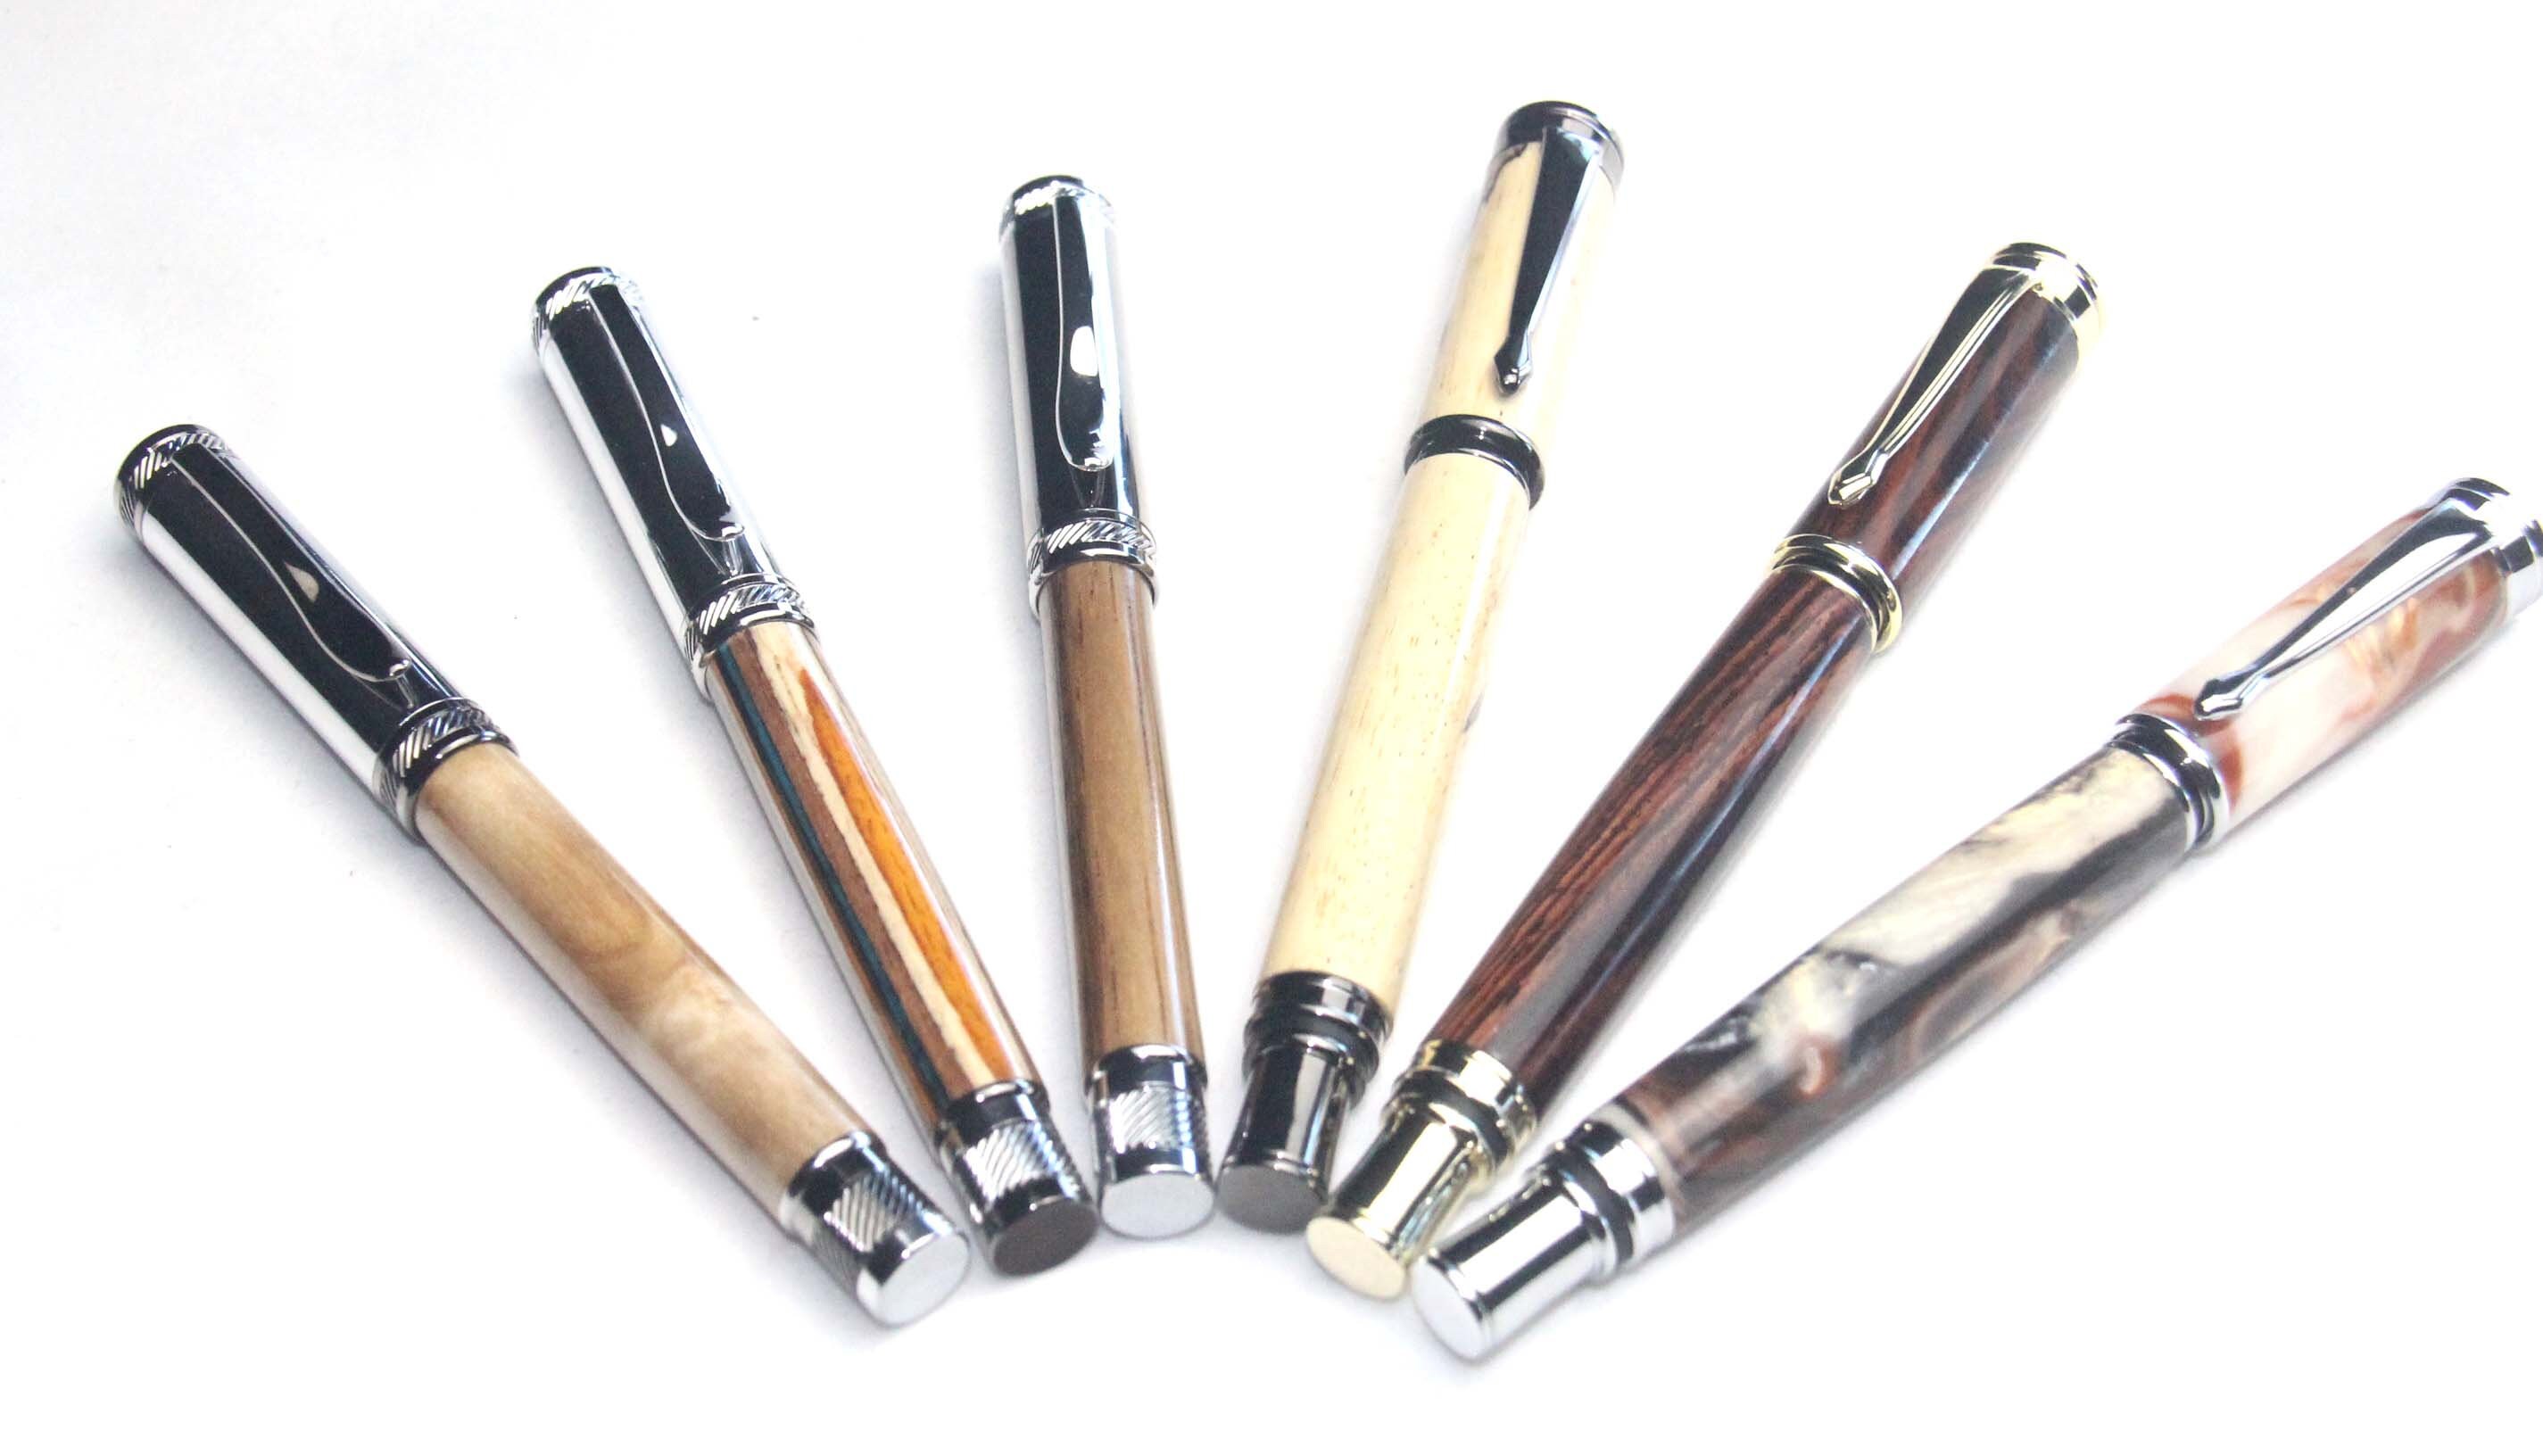 DIY Magnetic Fountain Pen Kits / Rollerball Pen Kits Handmade